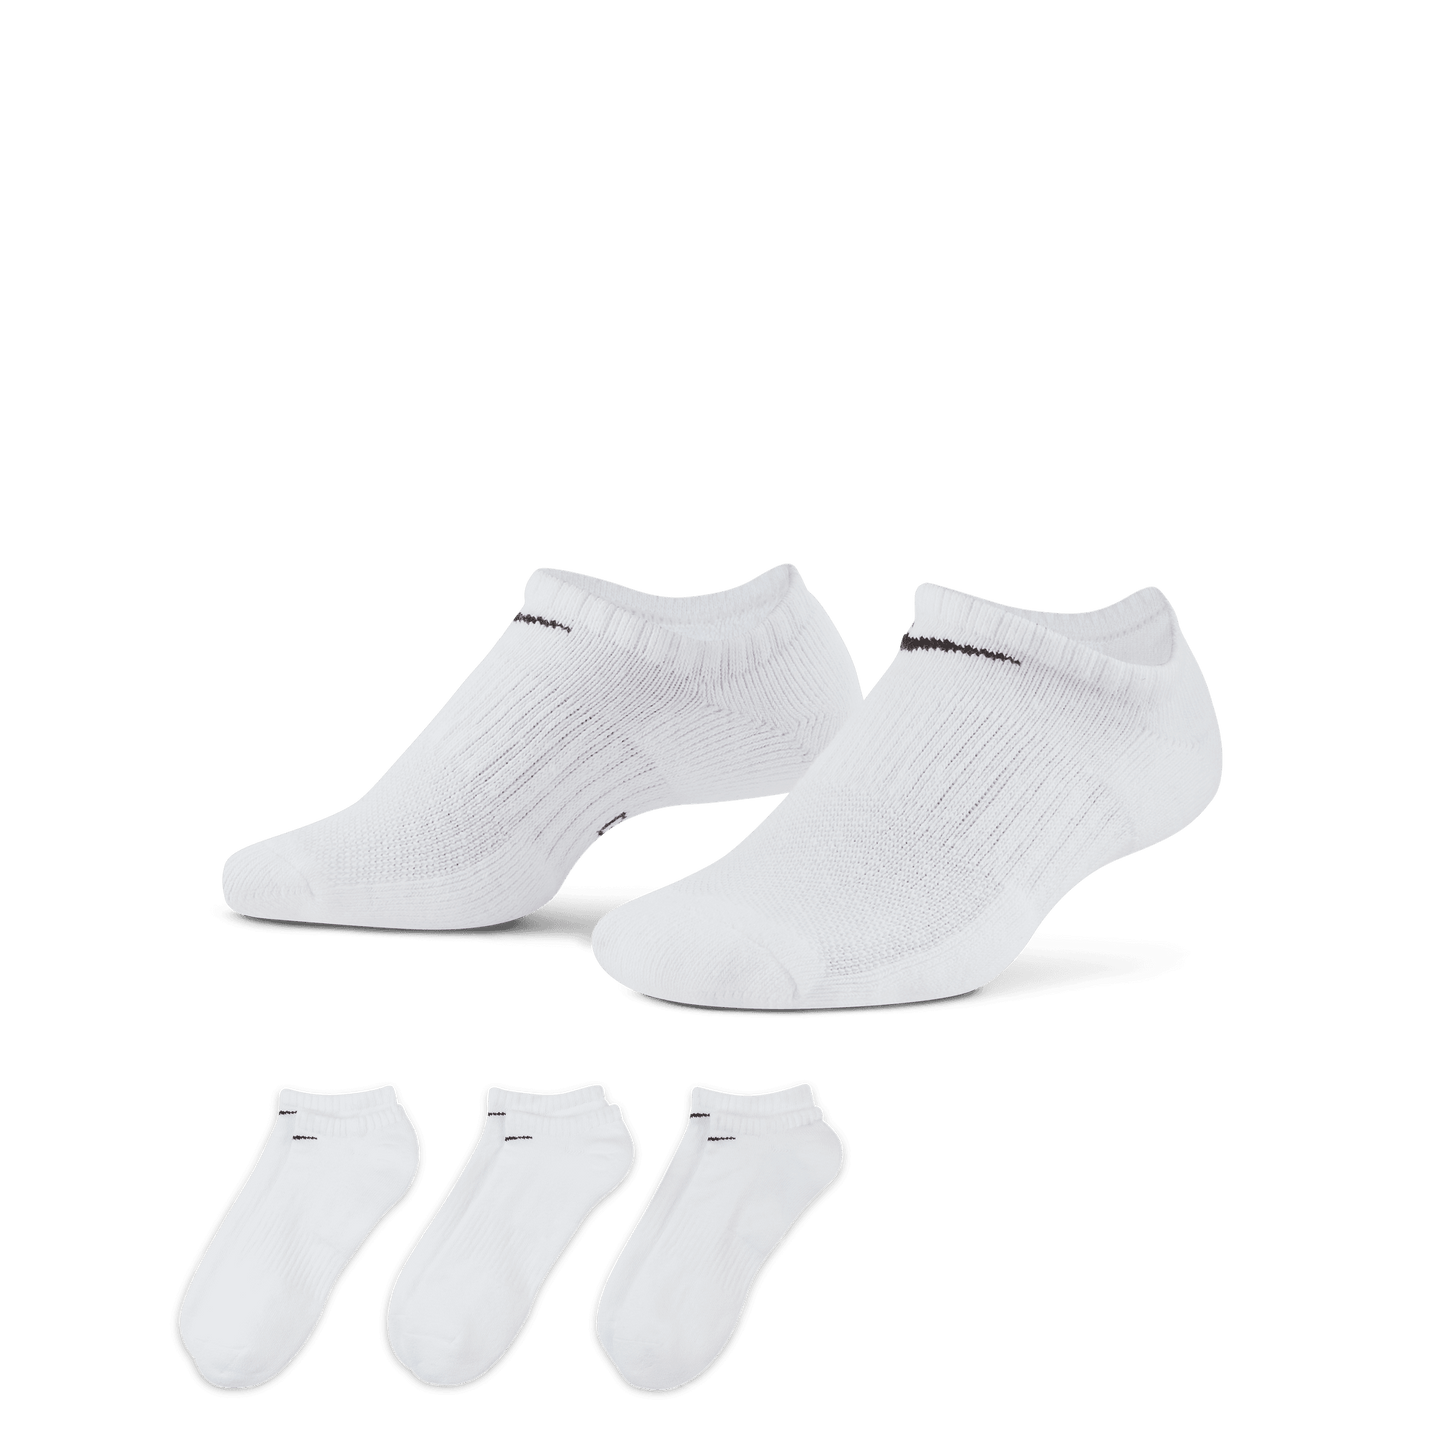 Nike Golf Everyday Lightweight No Show White Golf Socks 3 Pack SX7673 White 100 M 